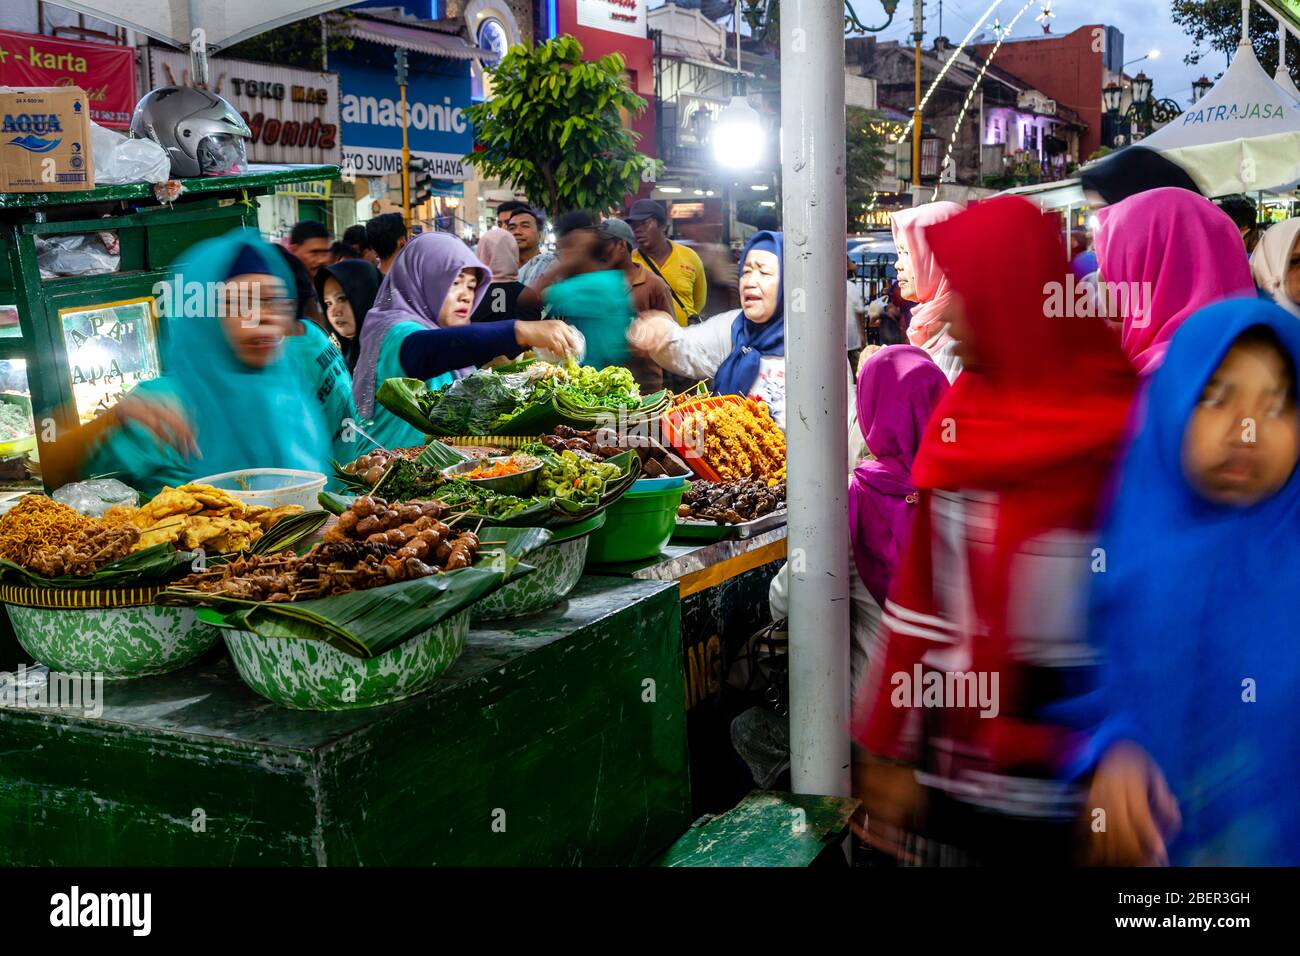 Ein farbenfroher Street Food-Stand im Nachtmarkt, Malioboro Street, Yogyakarta, Indonesien. Stockfoto